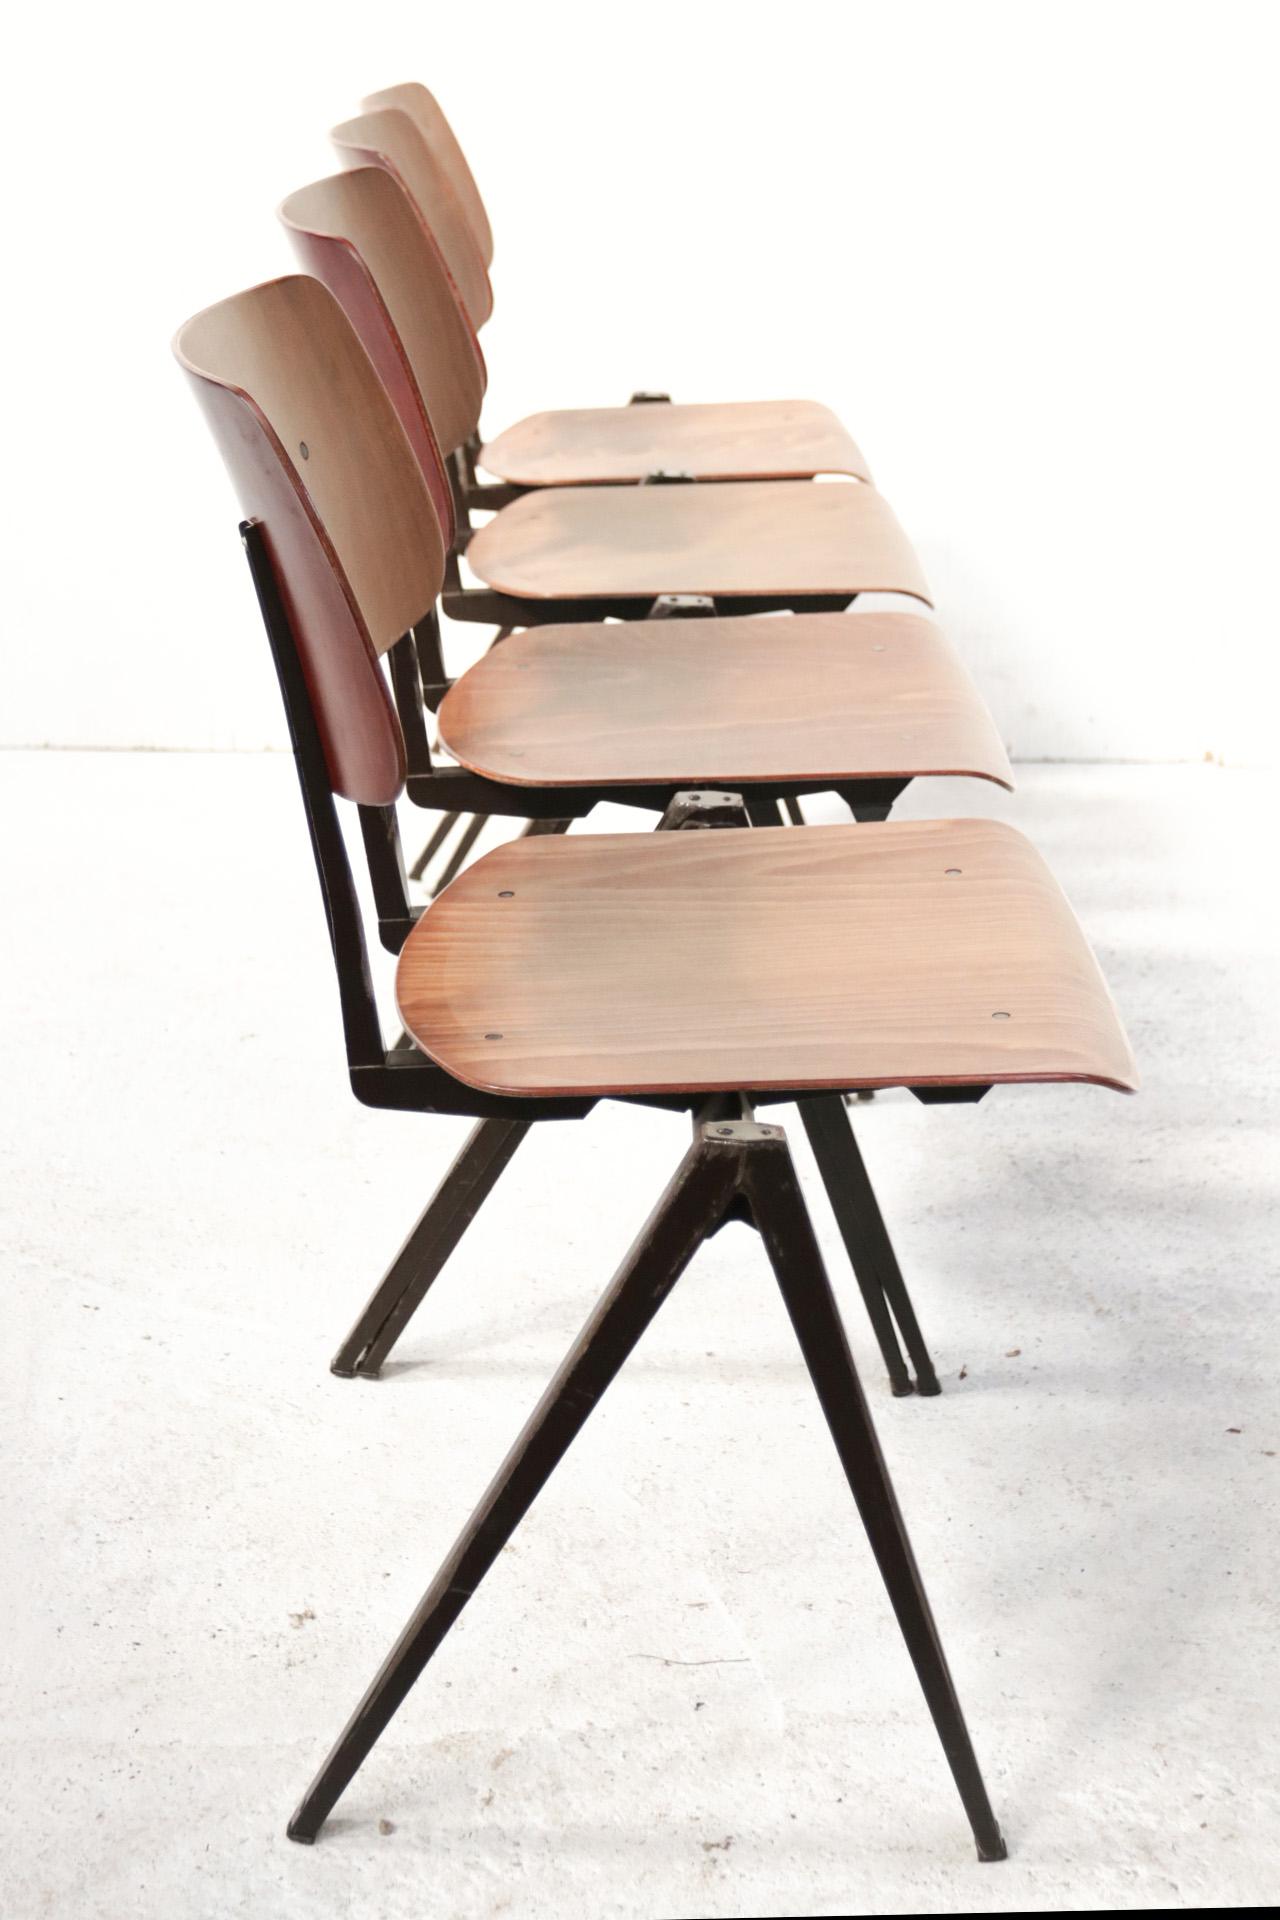 Dutch Industrial Design Prouve Style School Chairs S21 Compas Galvanitas For Sale 5